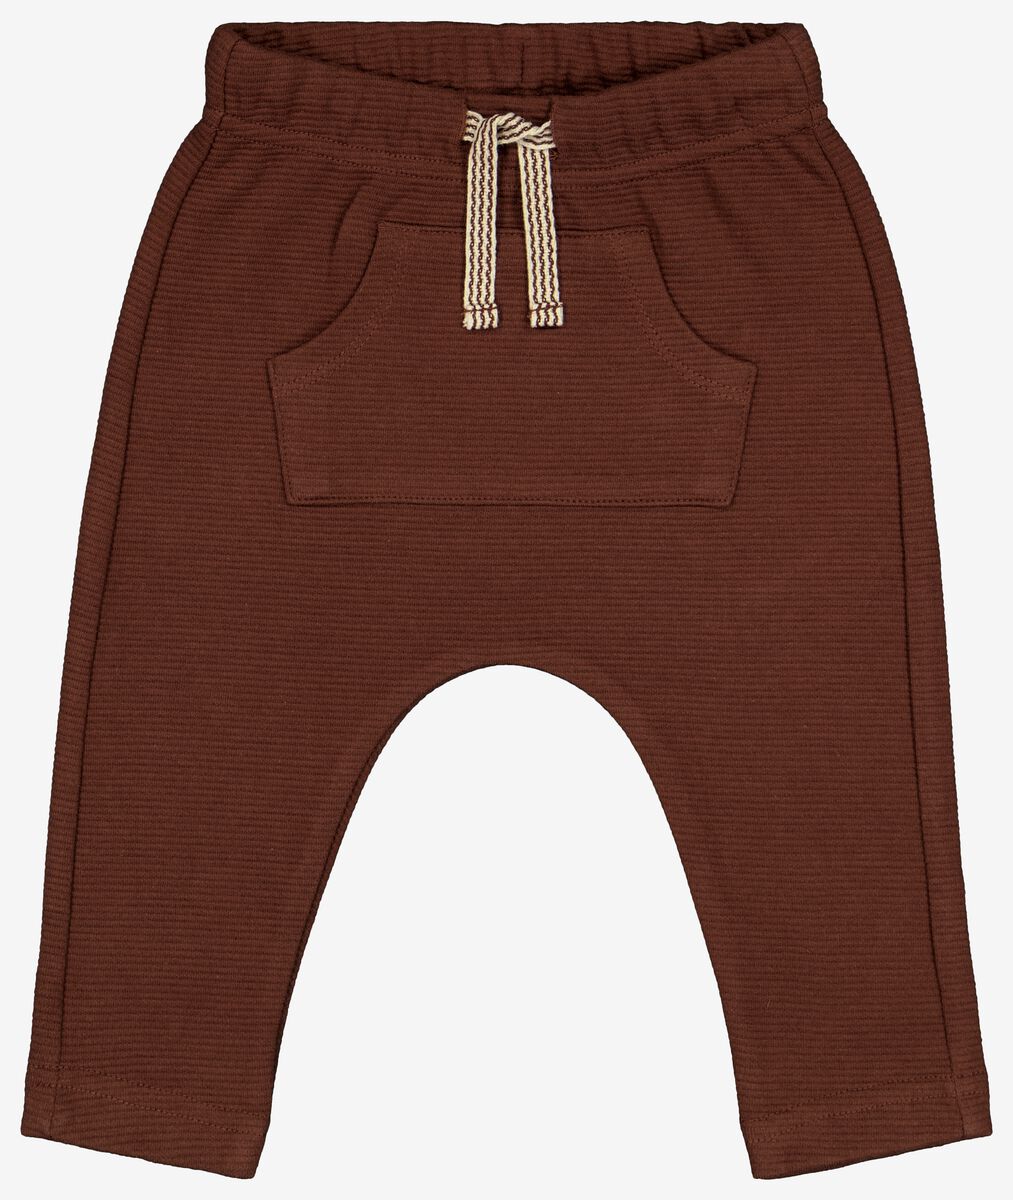 pantalon sweat bébé ottoman côte marron - 1000028213 - HEMA